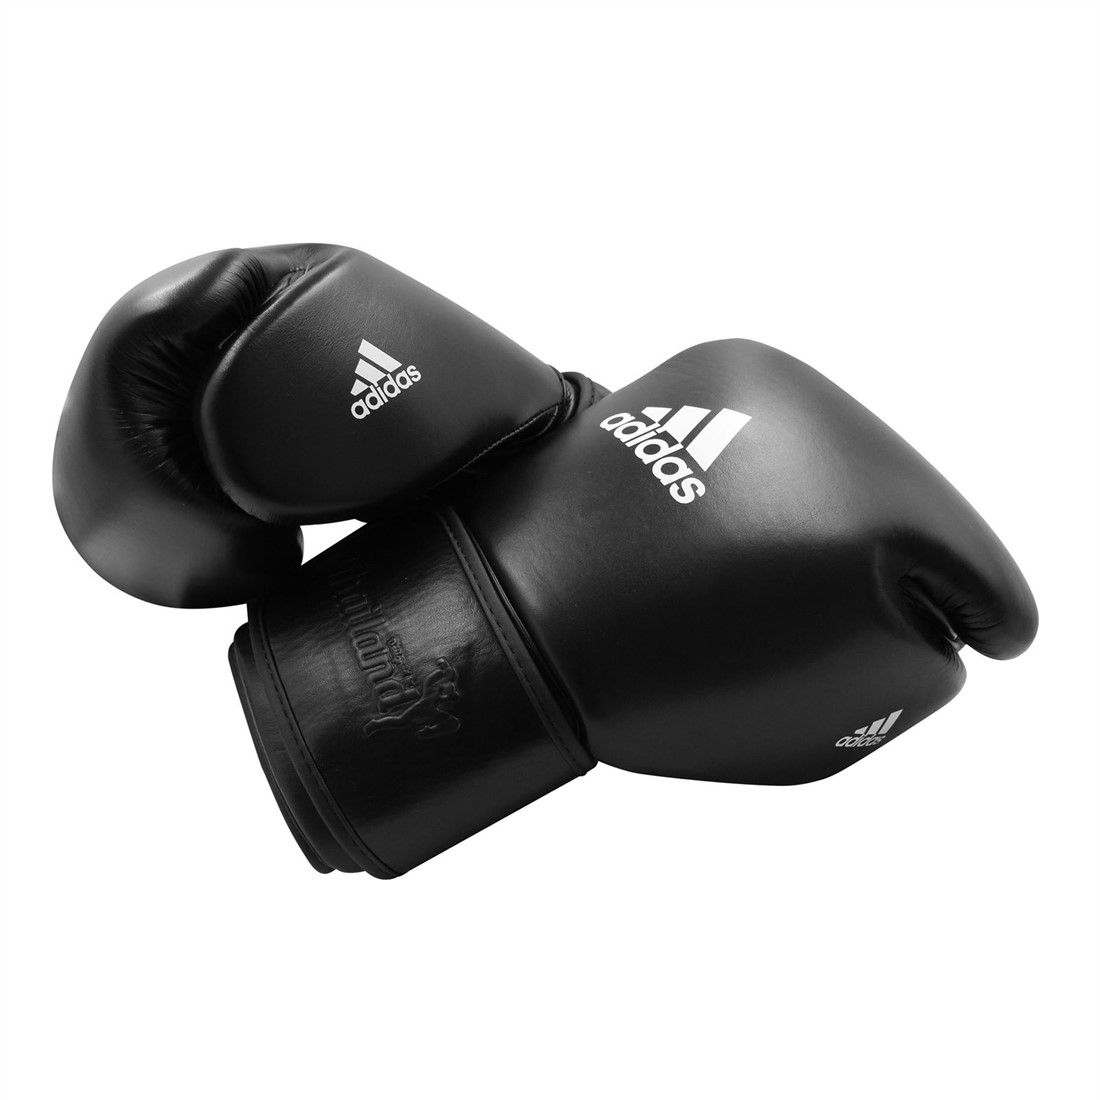 Concentratie onenigheid licht Adidas Muay Thai TP300 (Kick)Bokshandschoenen - Zwart - 14 oz |  Fitnessapparaat.nl